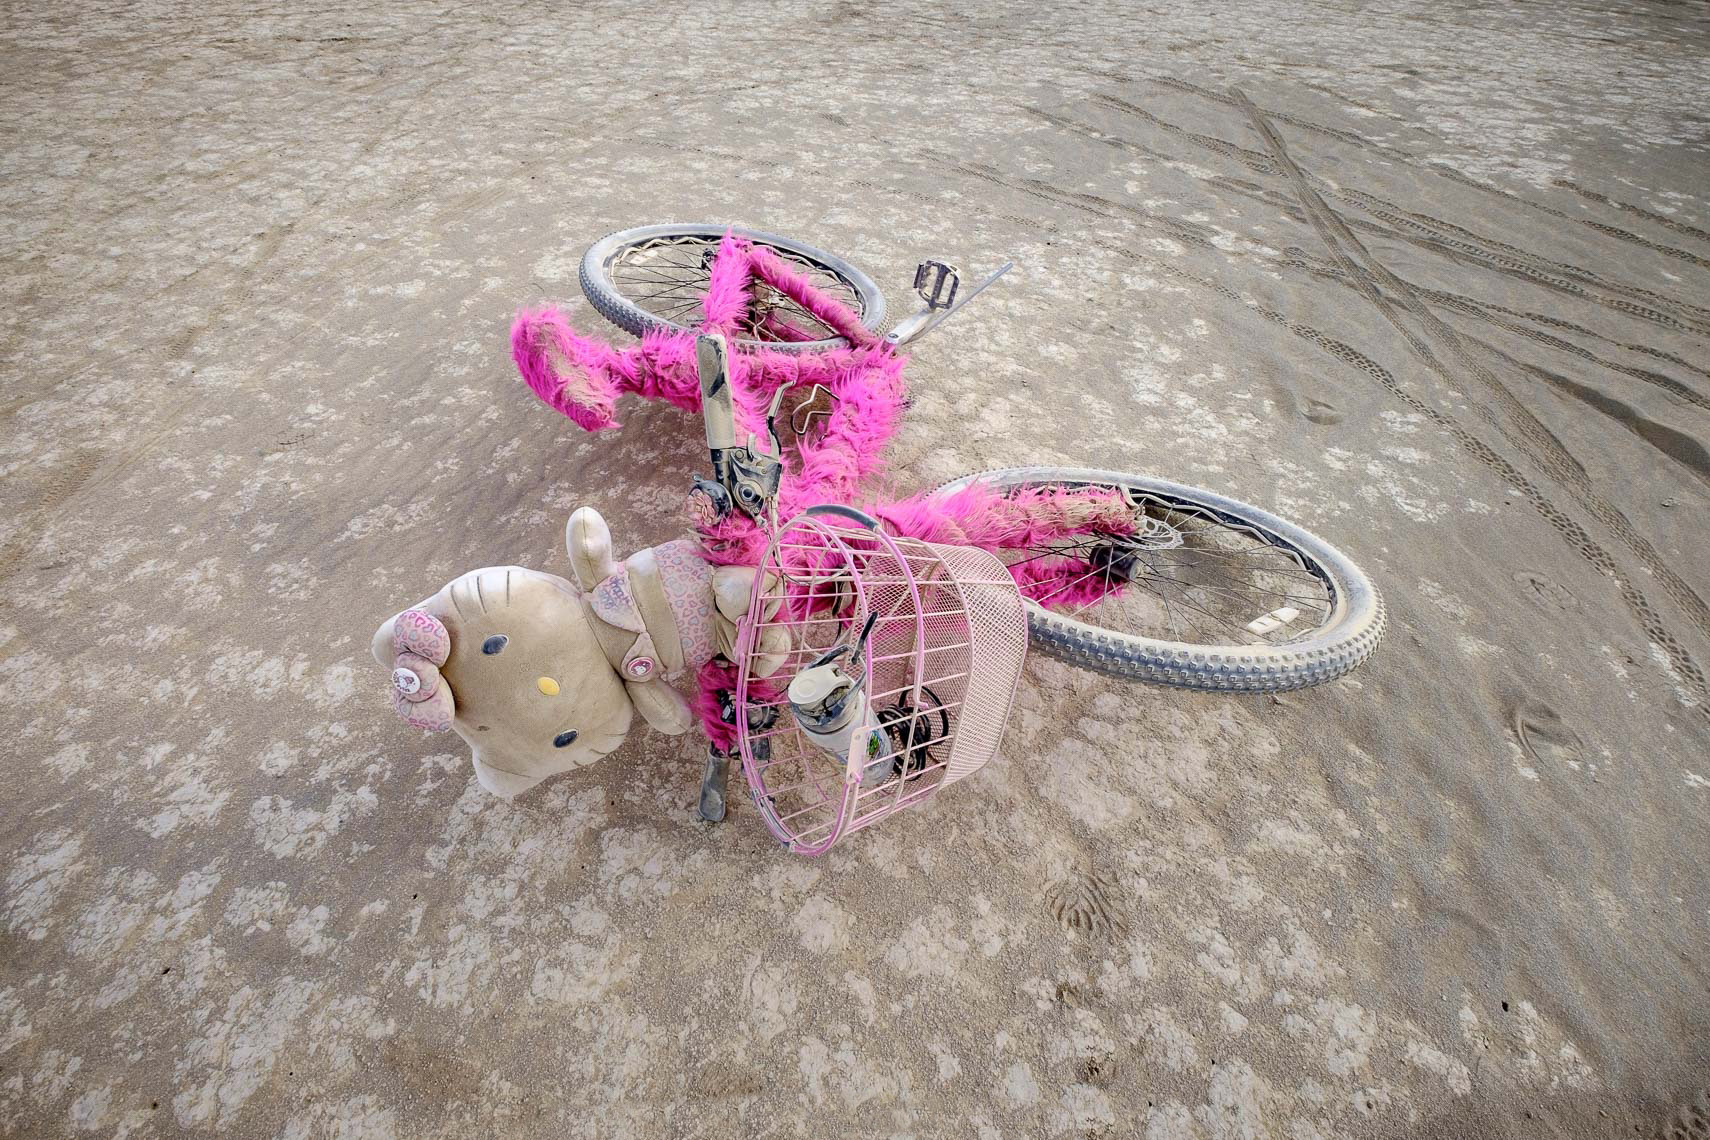 Abandoned Hello Kitty bike in deep playa-